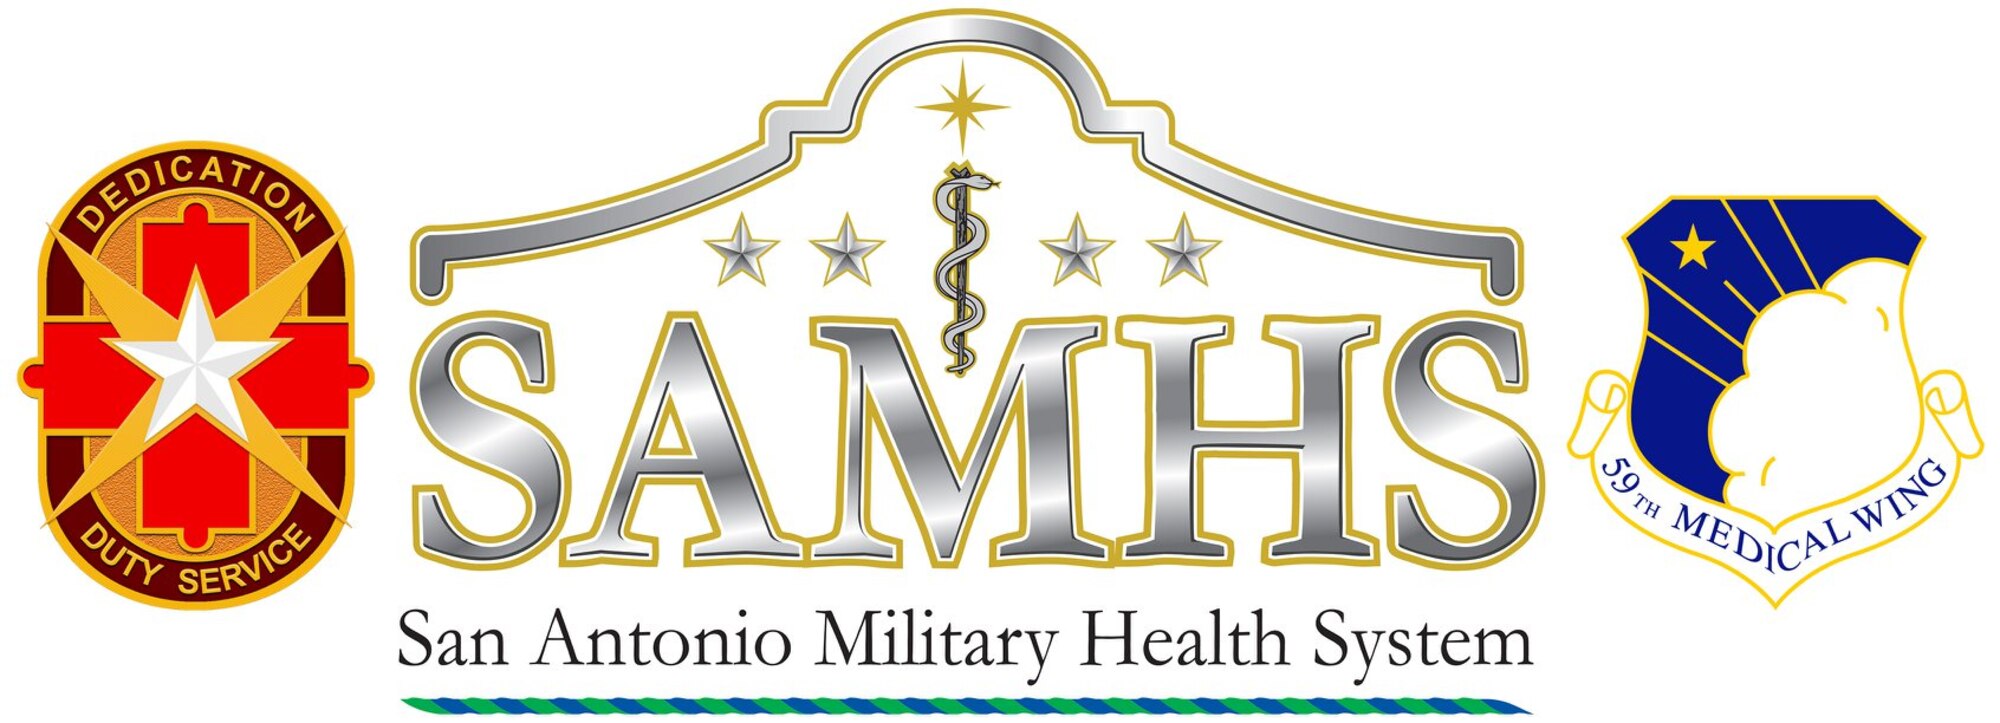 San Antonio Military Health System sets holiday hours.